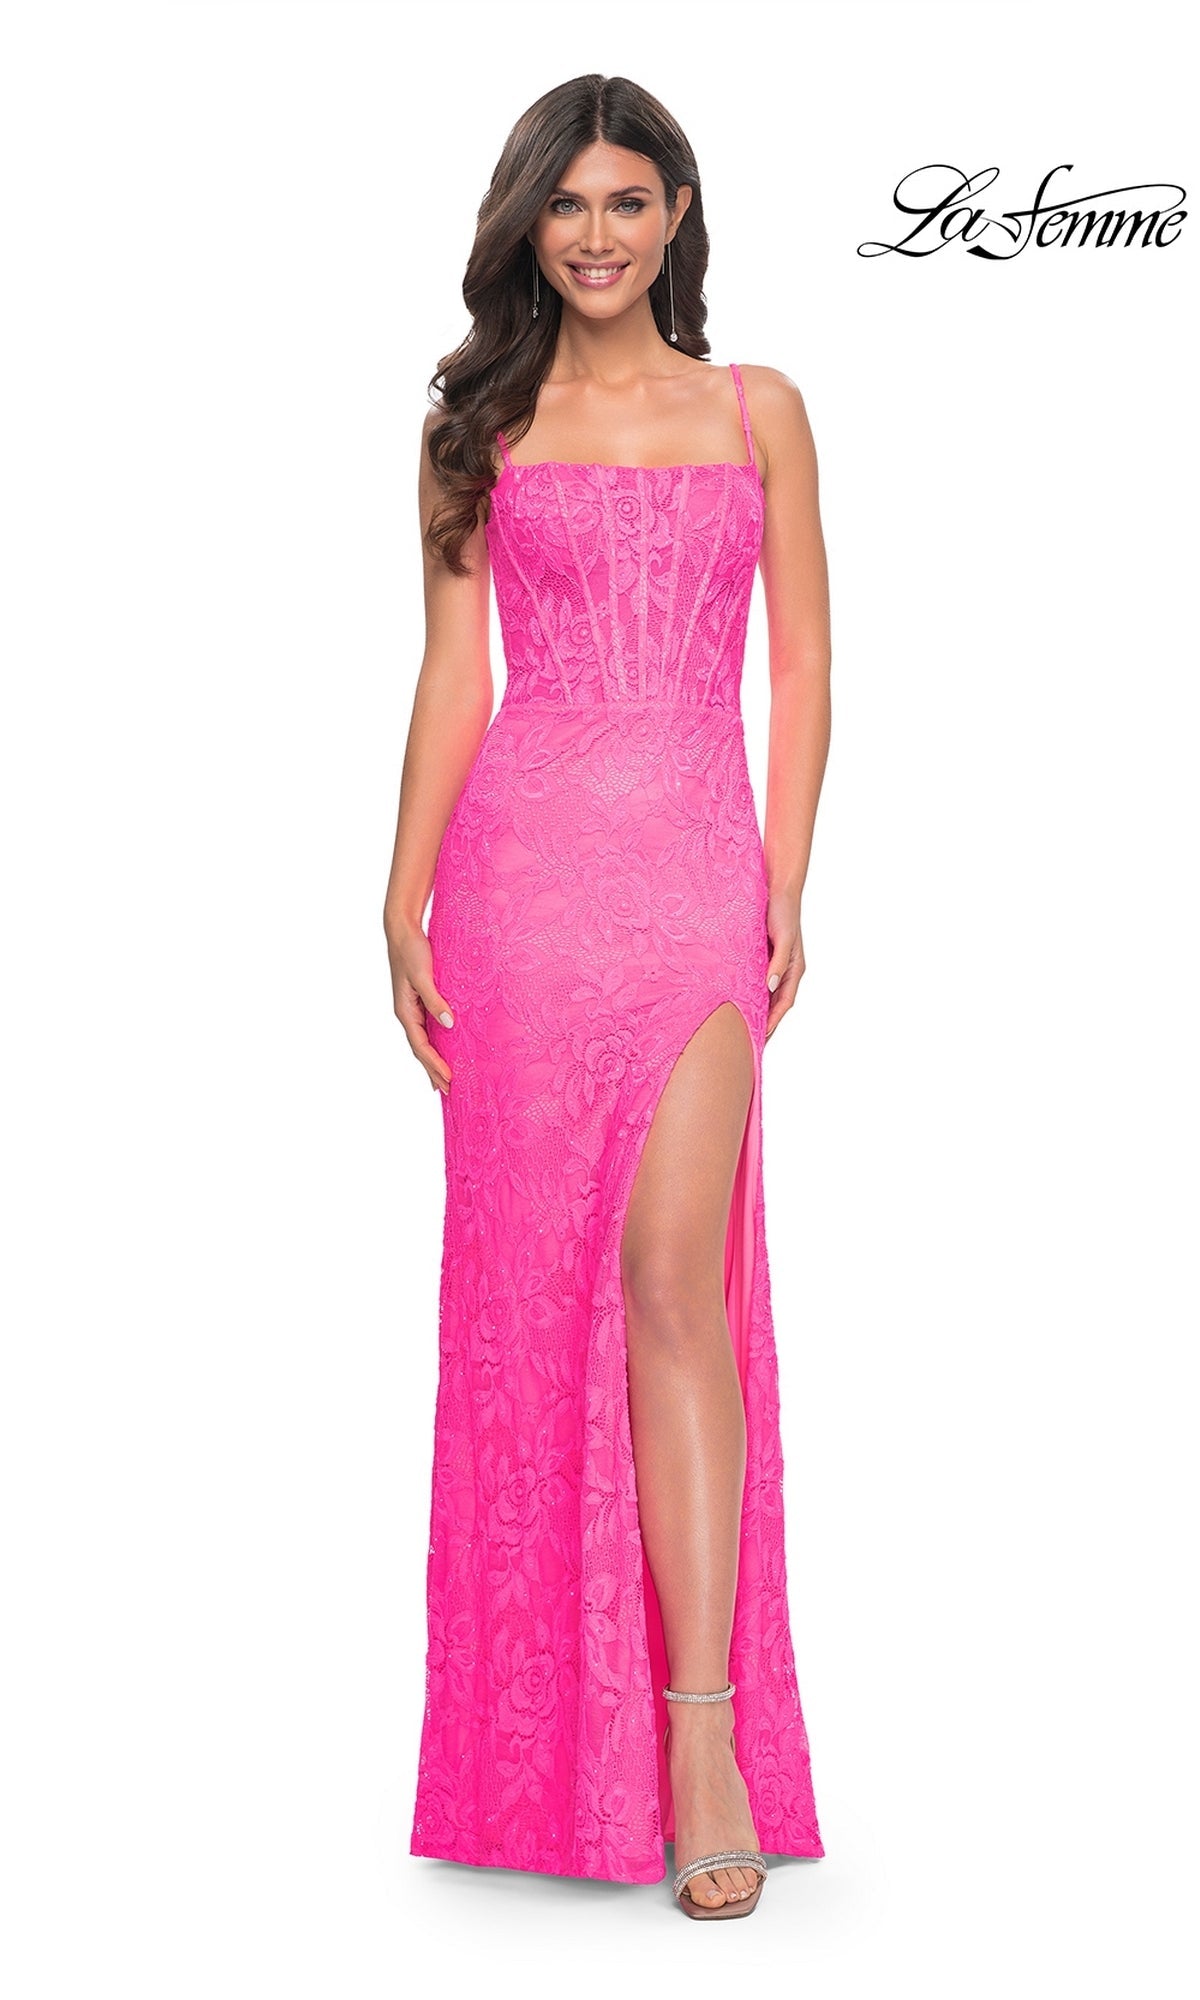  La Femme 32423 Formal Prom Dress